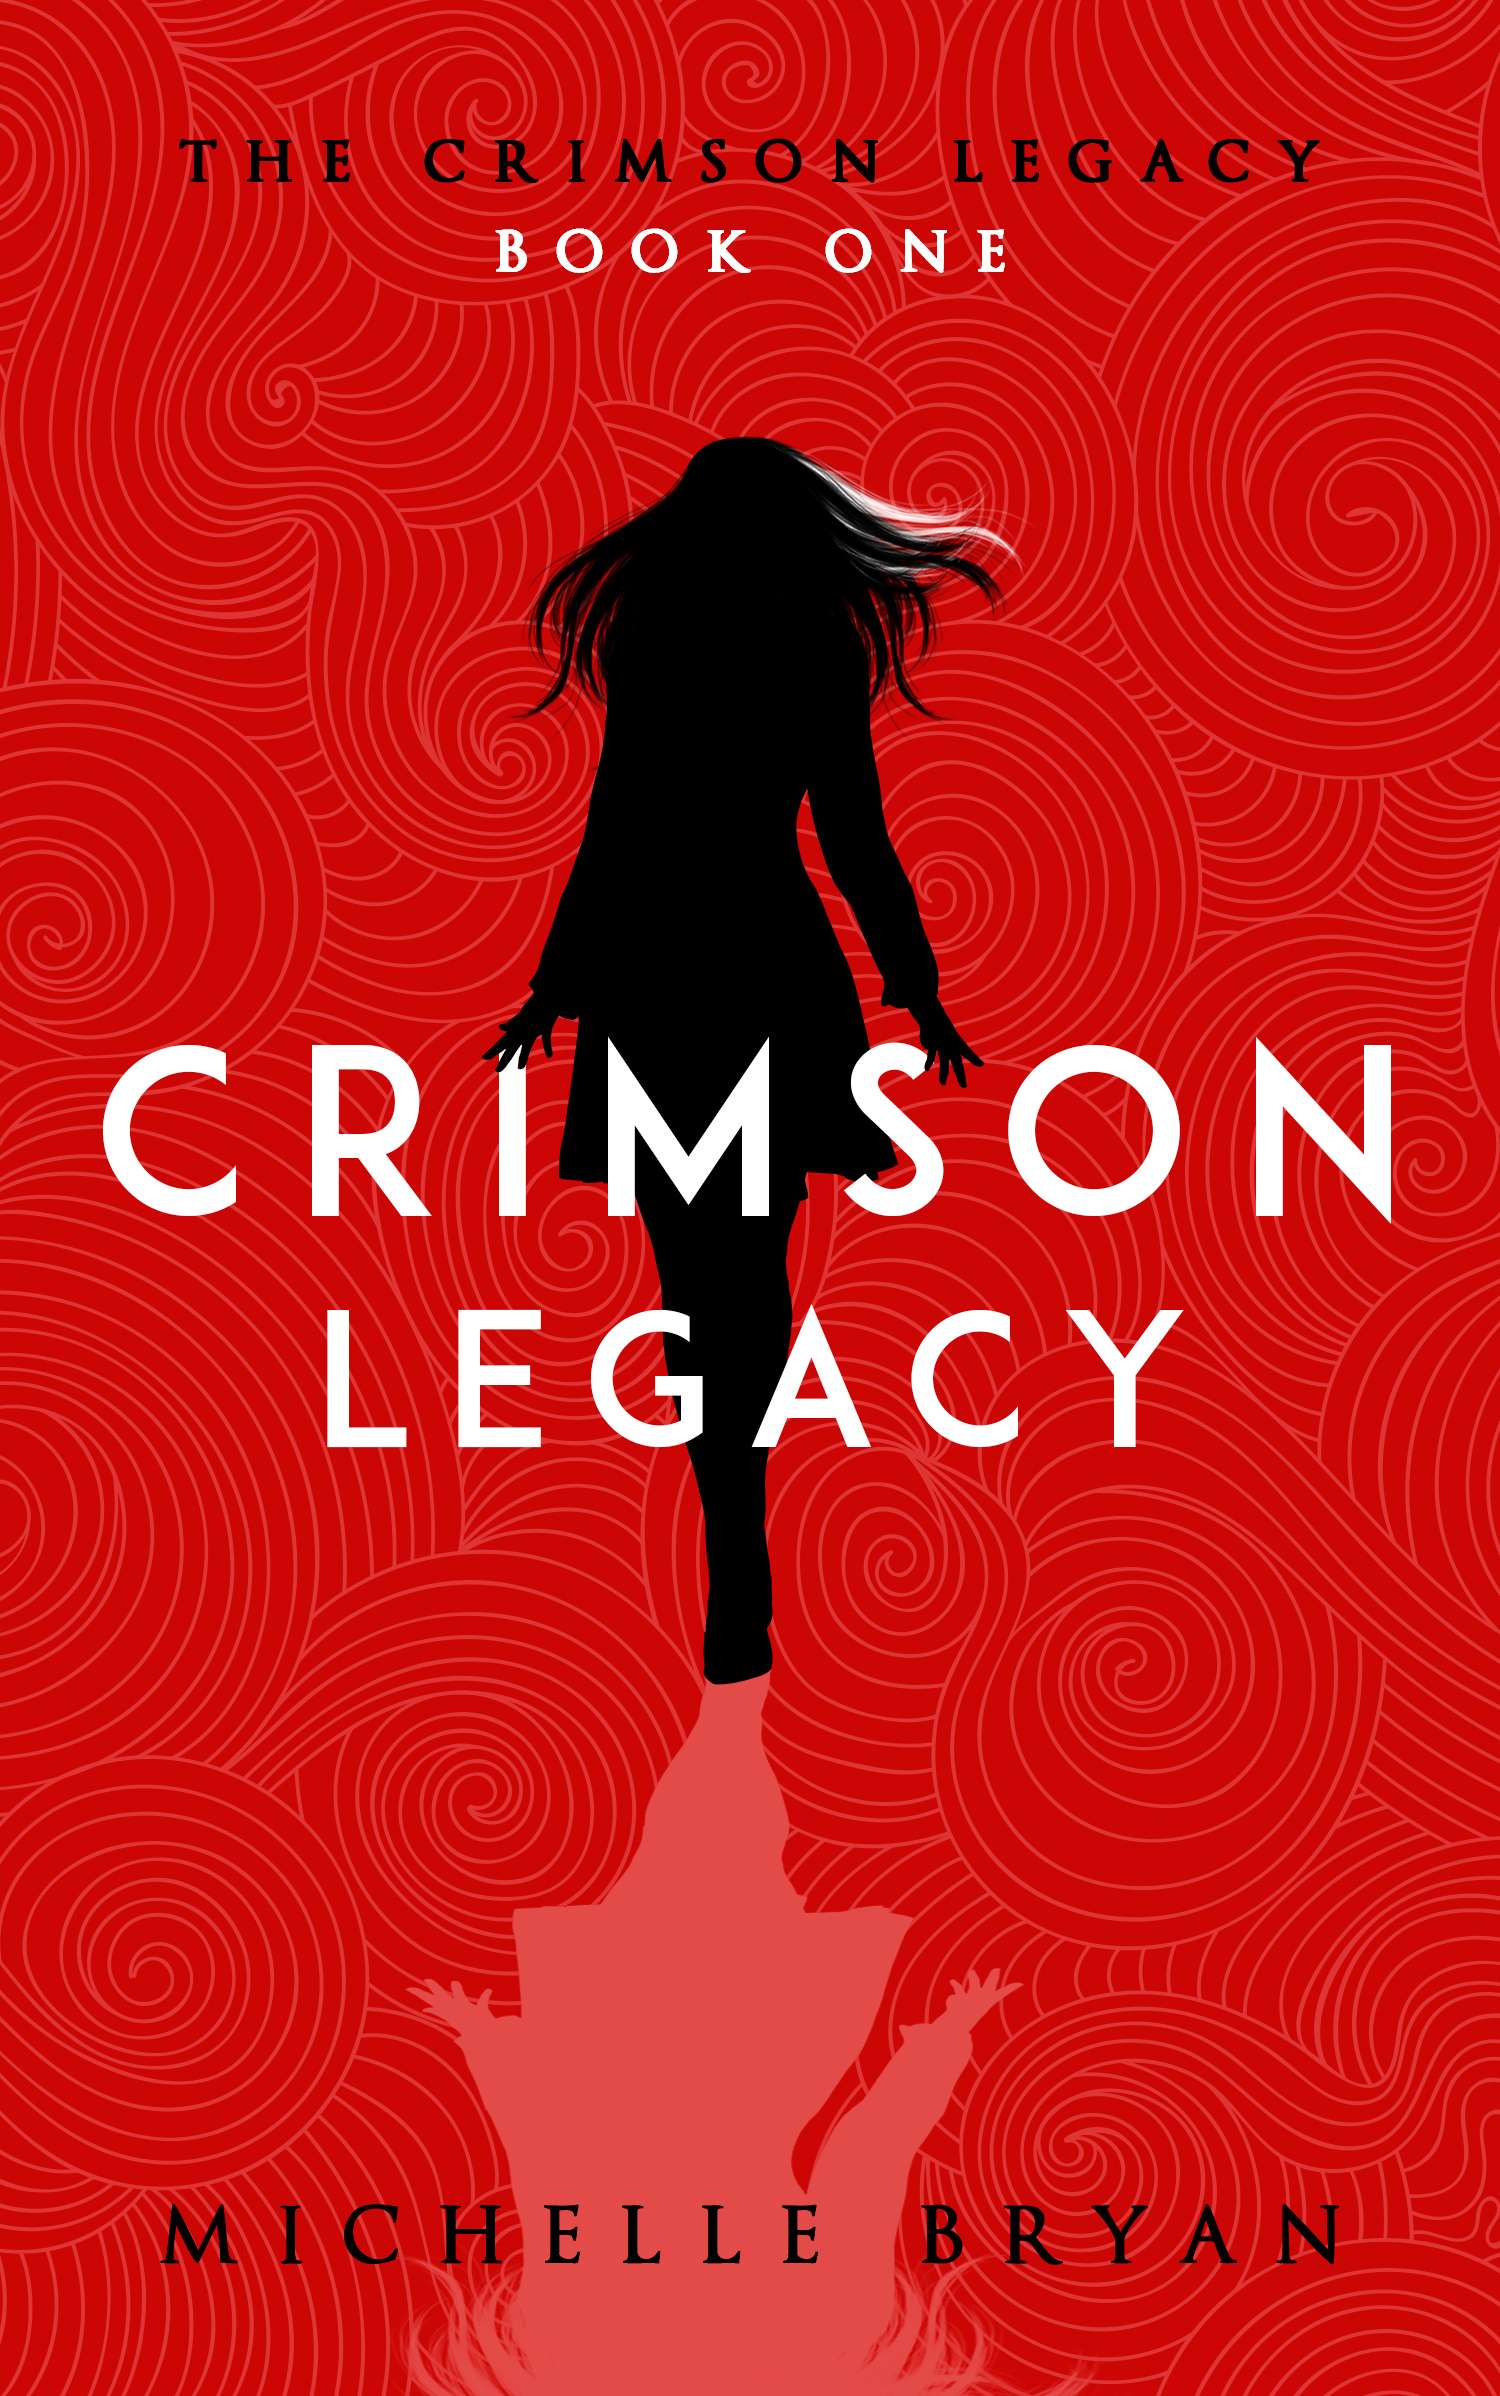 The Crimson Legacy book 1